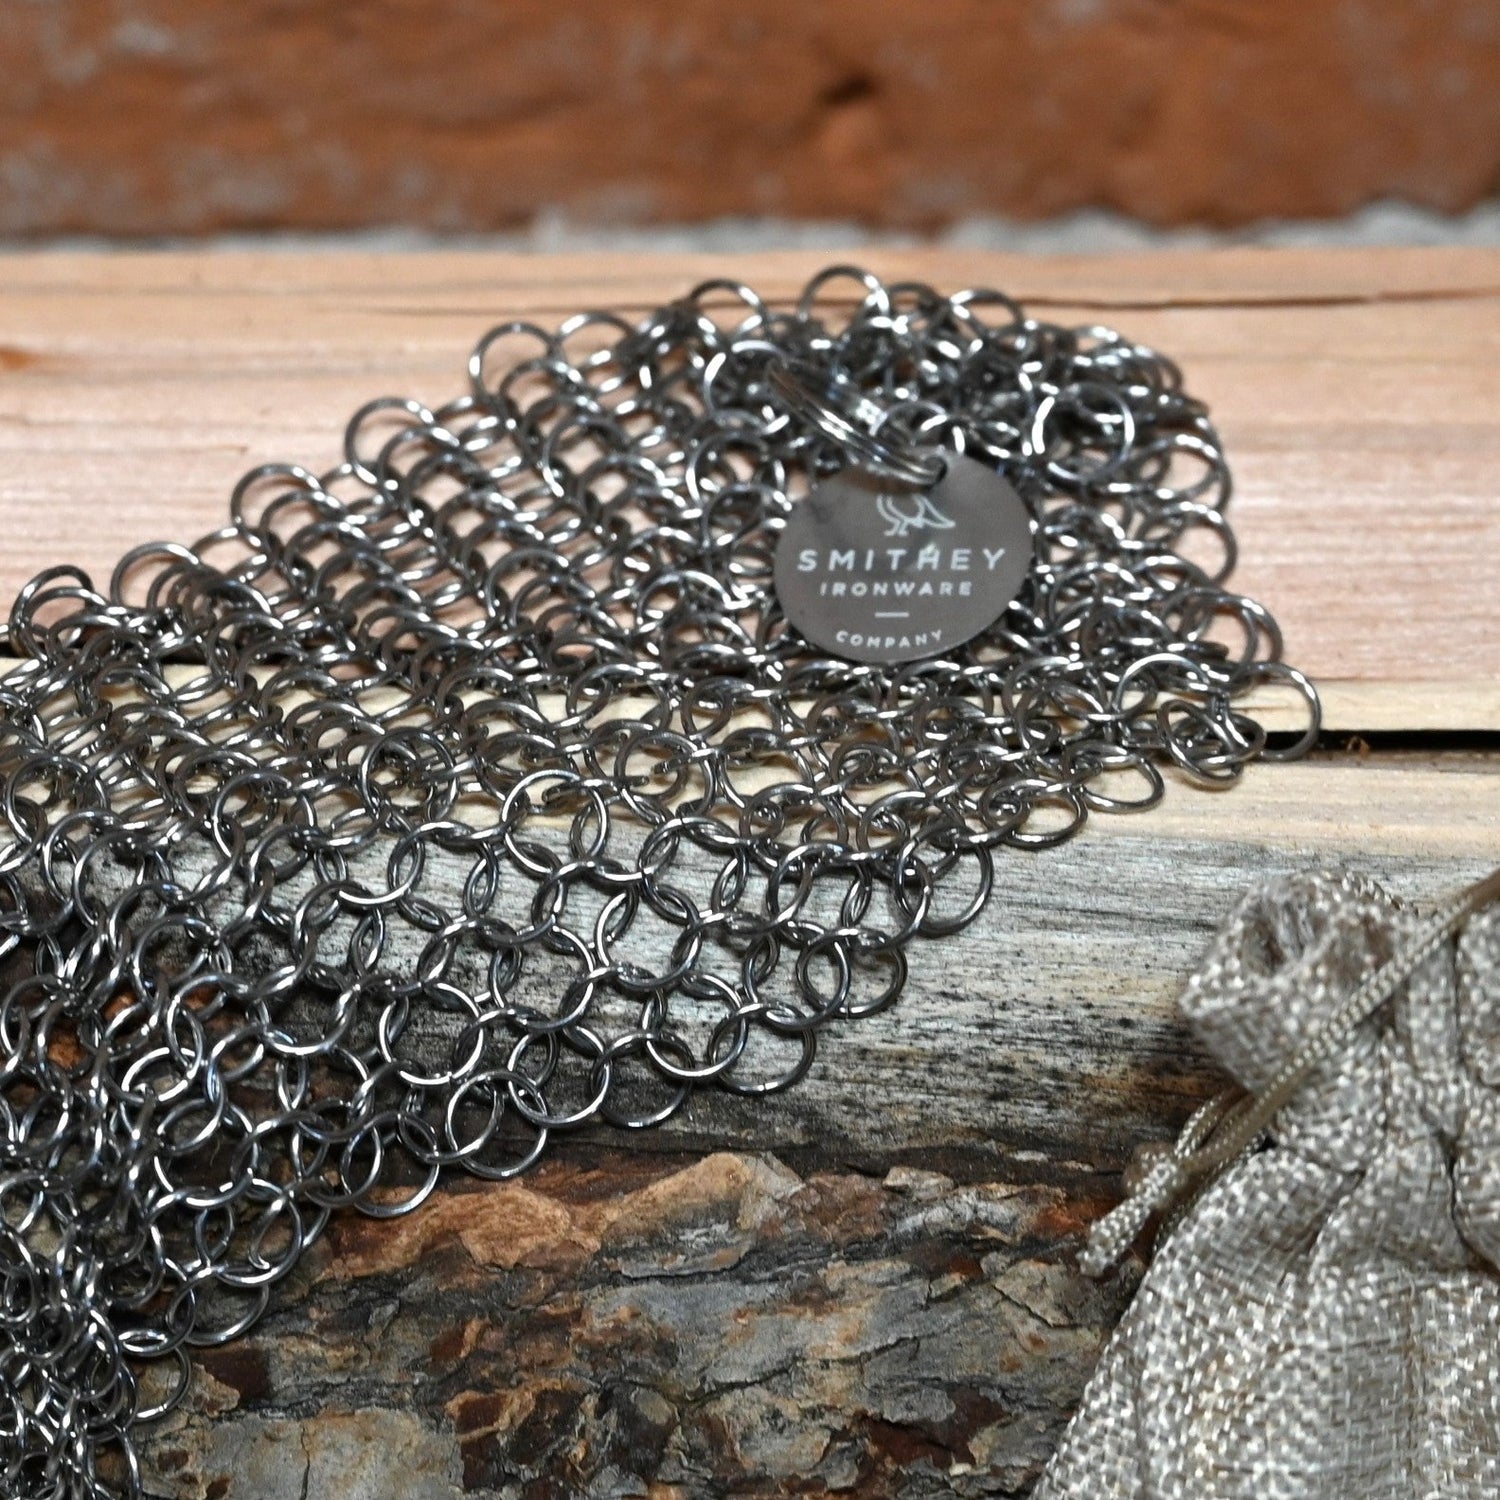 Stainless-Steel Chain Mail Scrubber by Smithey Ironware Co. - Fieldshop by  Garden & Gun